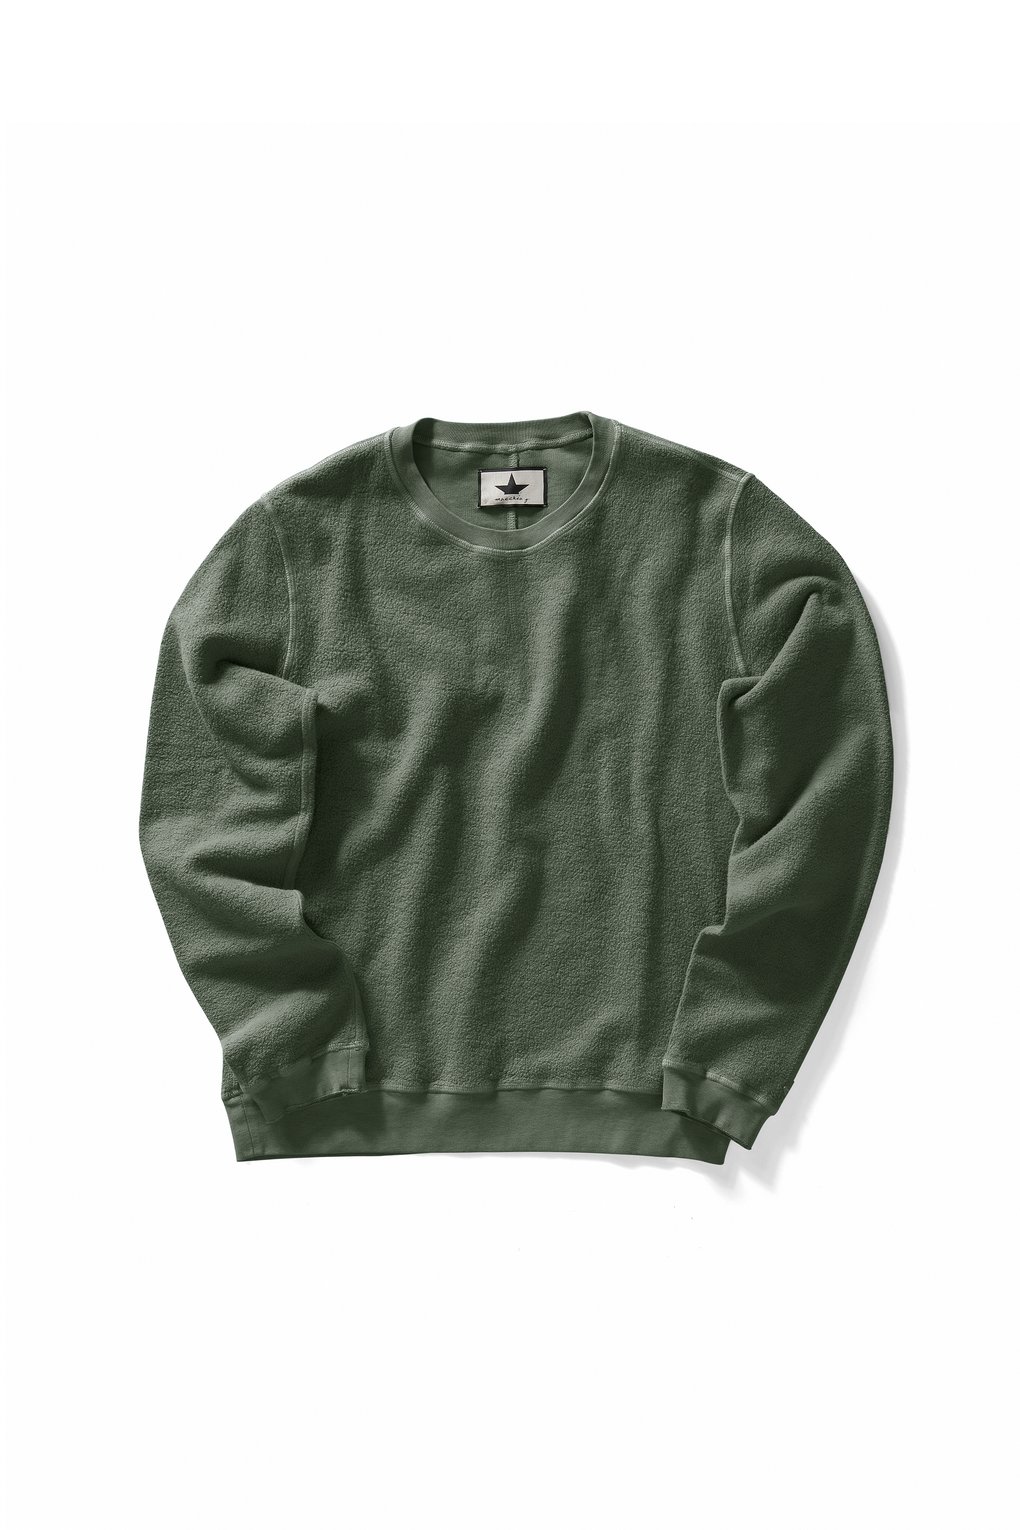 Men's Sweatshirt - FM2042TOMER - Army Green